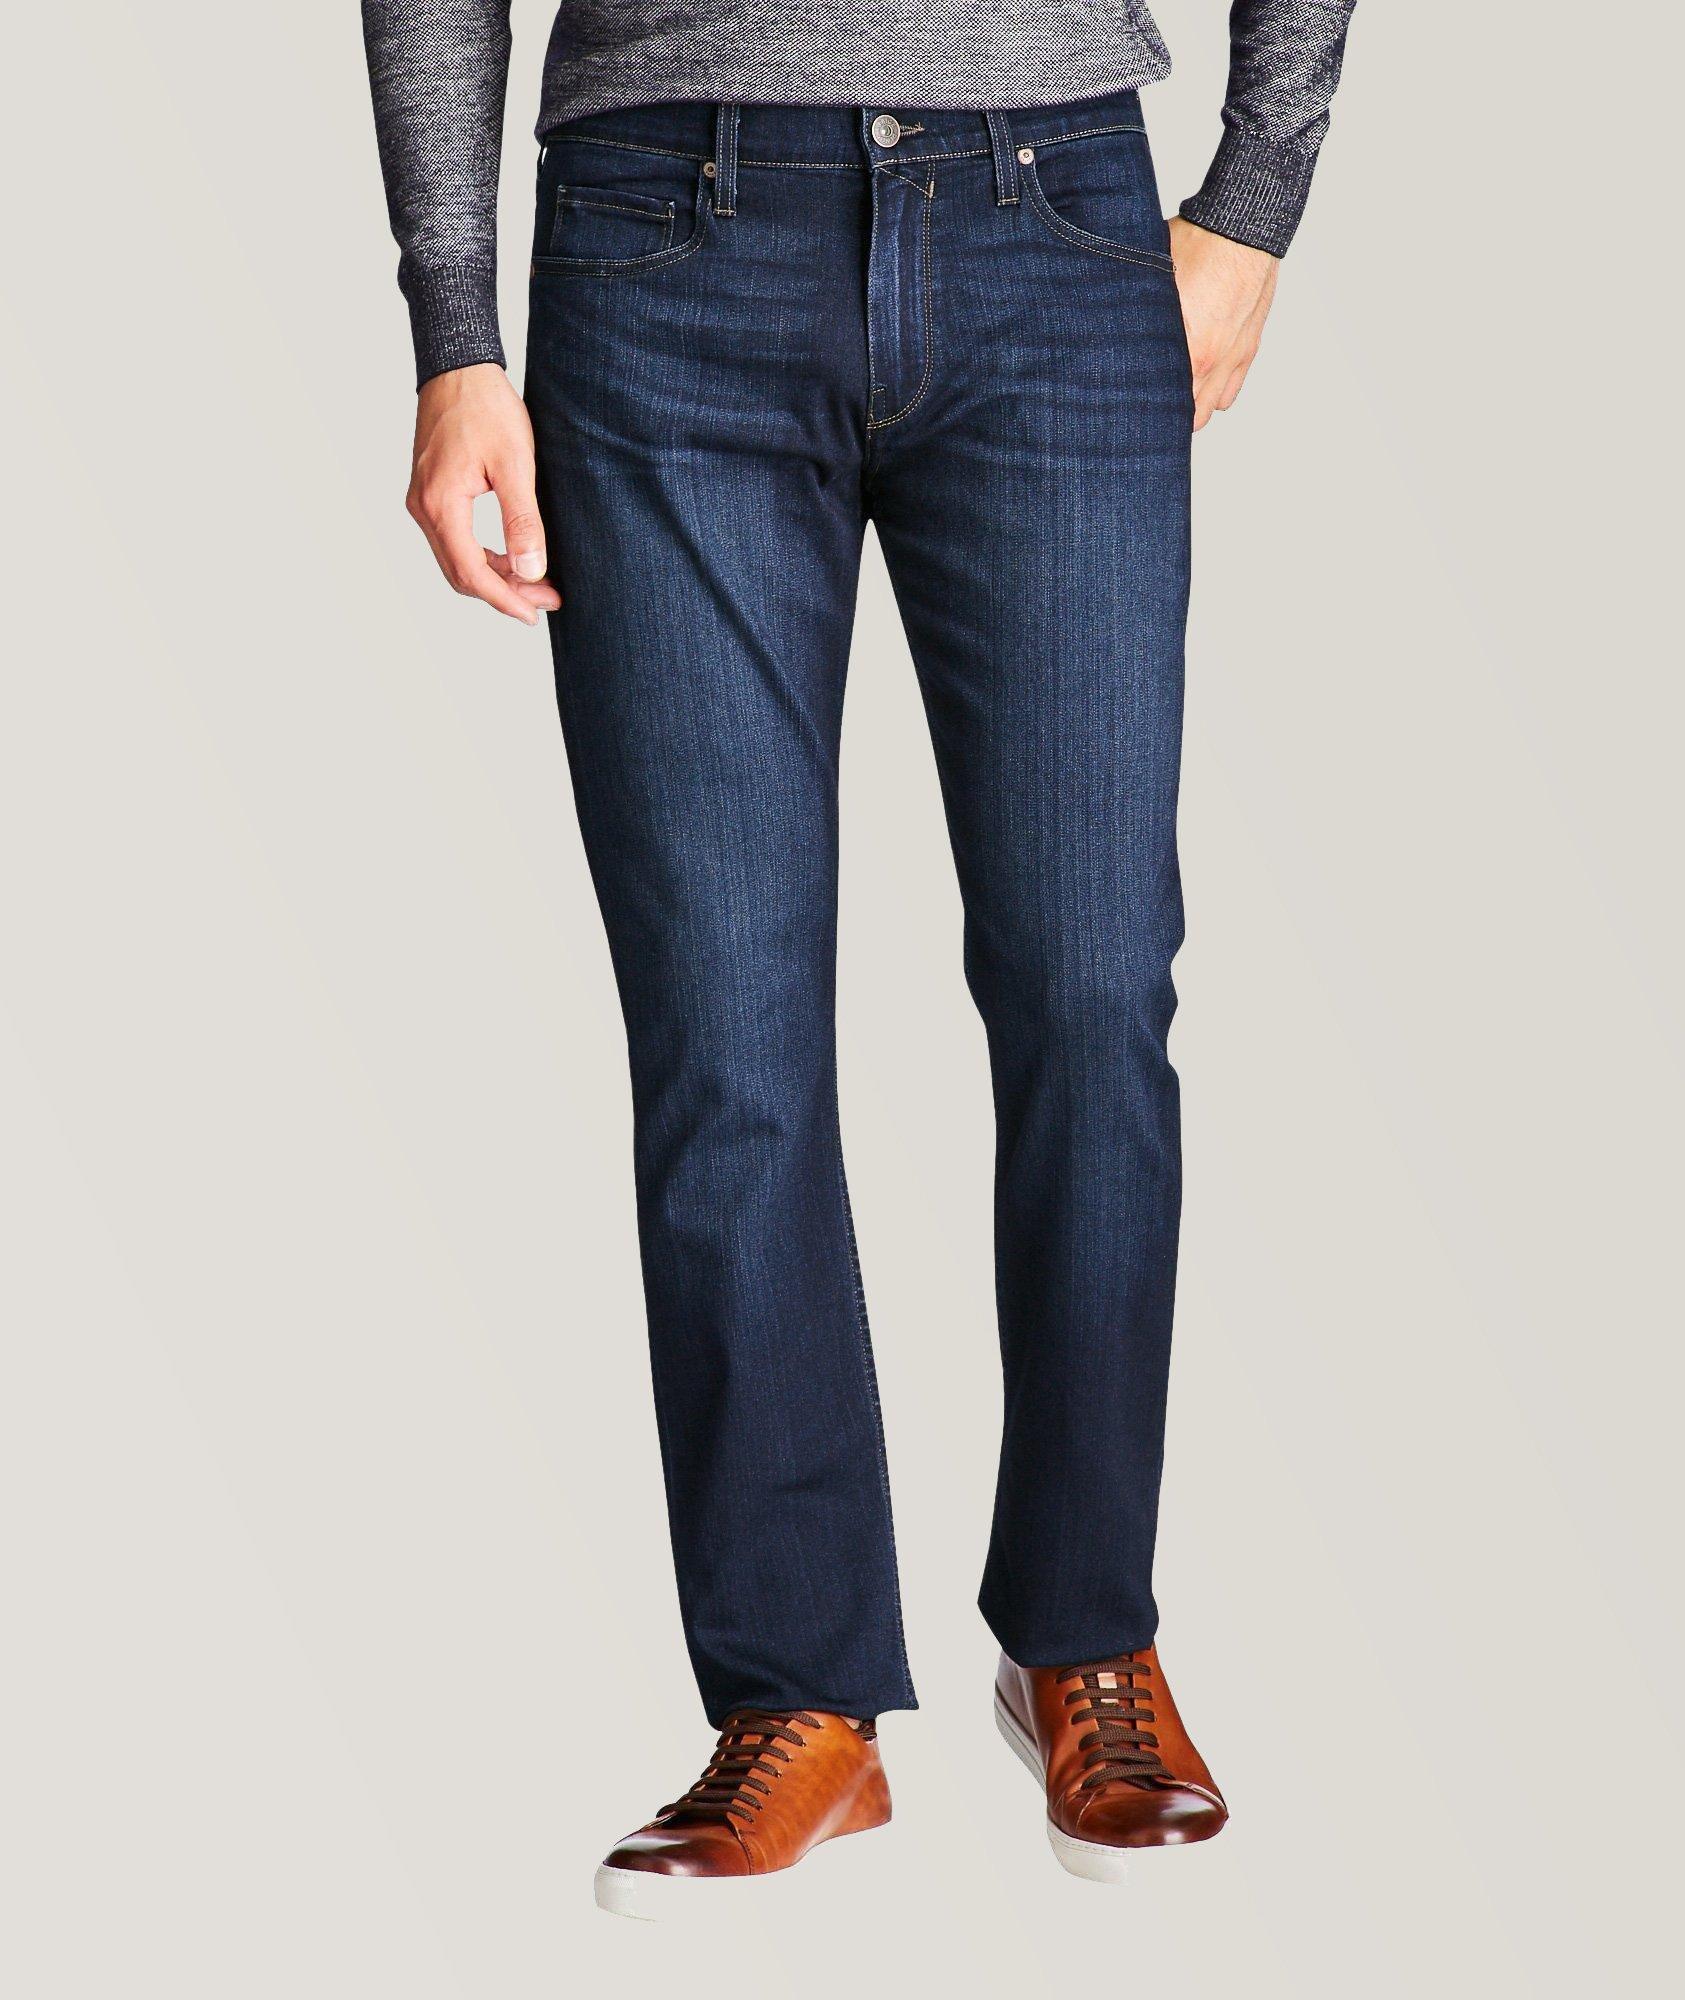 Harry Rosen Federal Slim Straight Transcend Jeans. 1